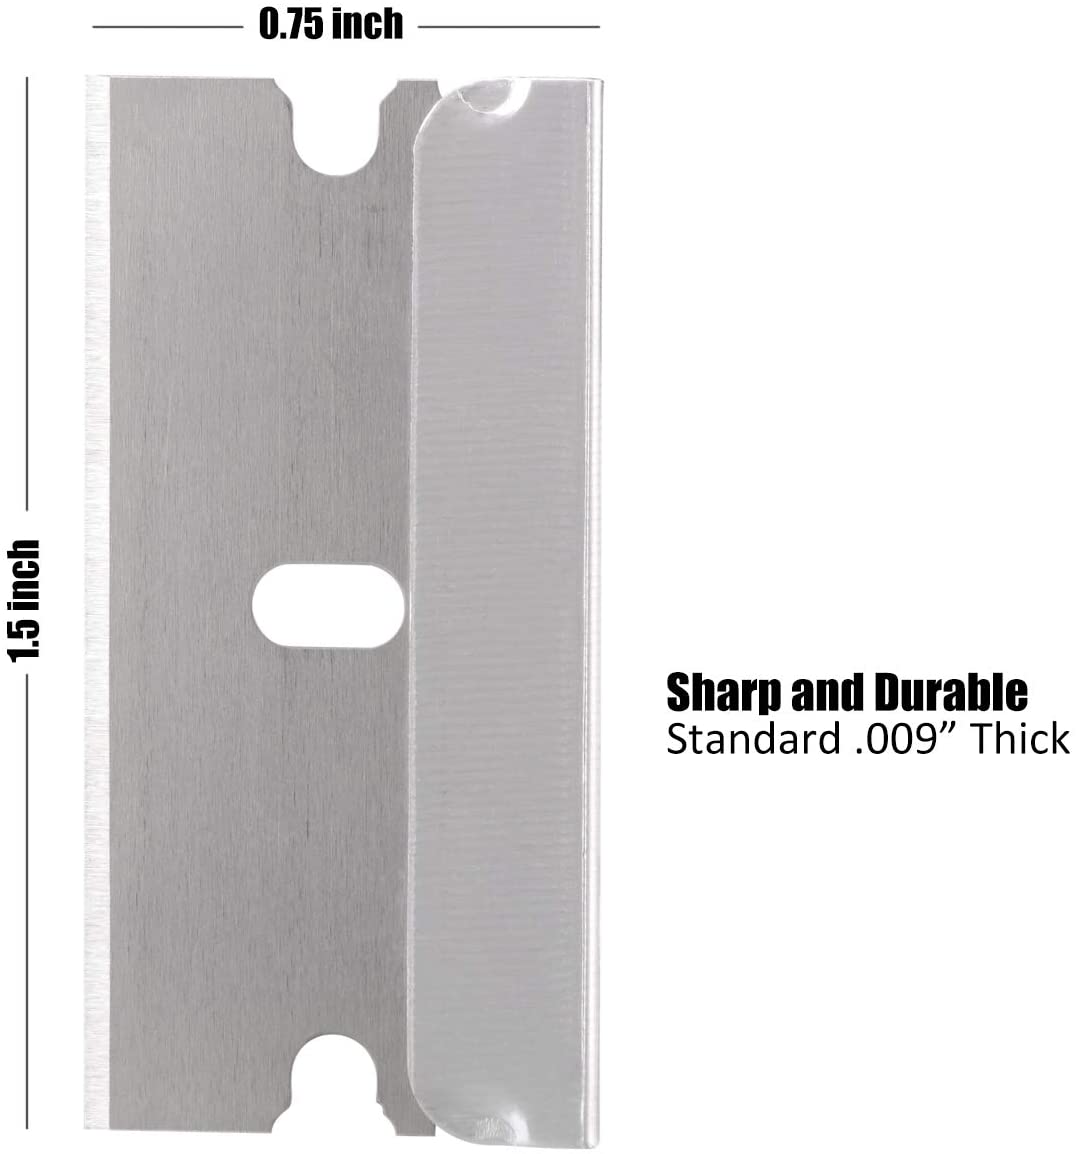 Single Edge Industrial Razor Blades, Standard Razor Blades Scraper for Removing Paint,Mastic,Stickers,Putty or Decals, 100/box